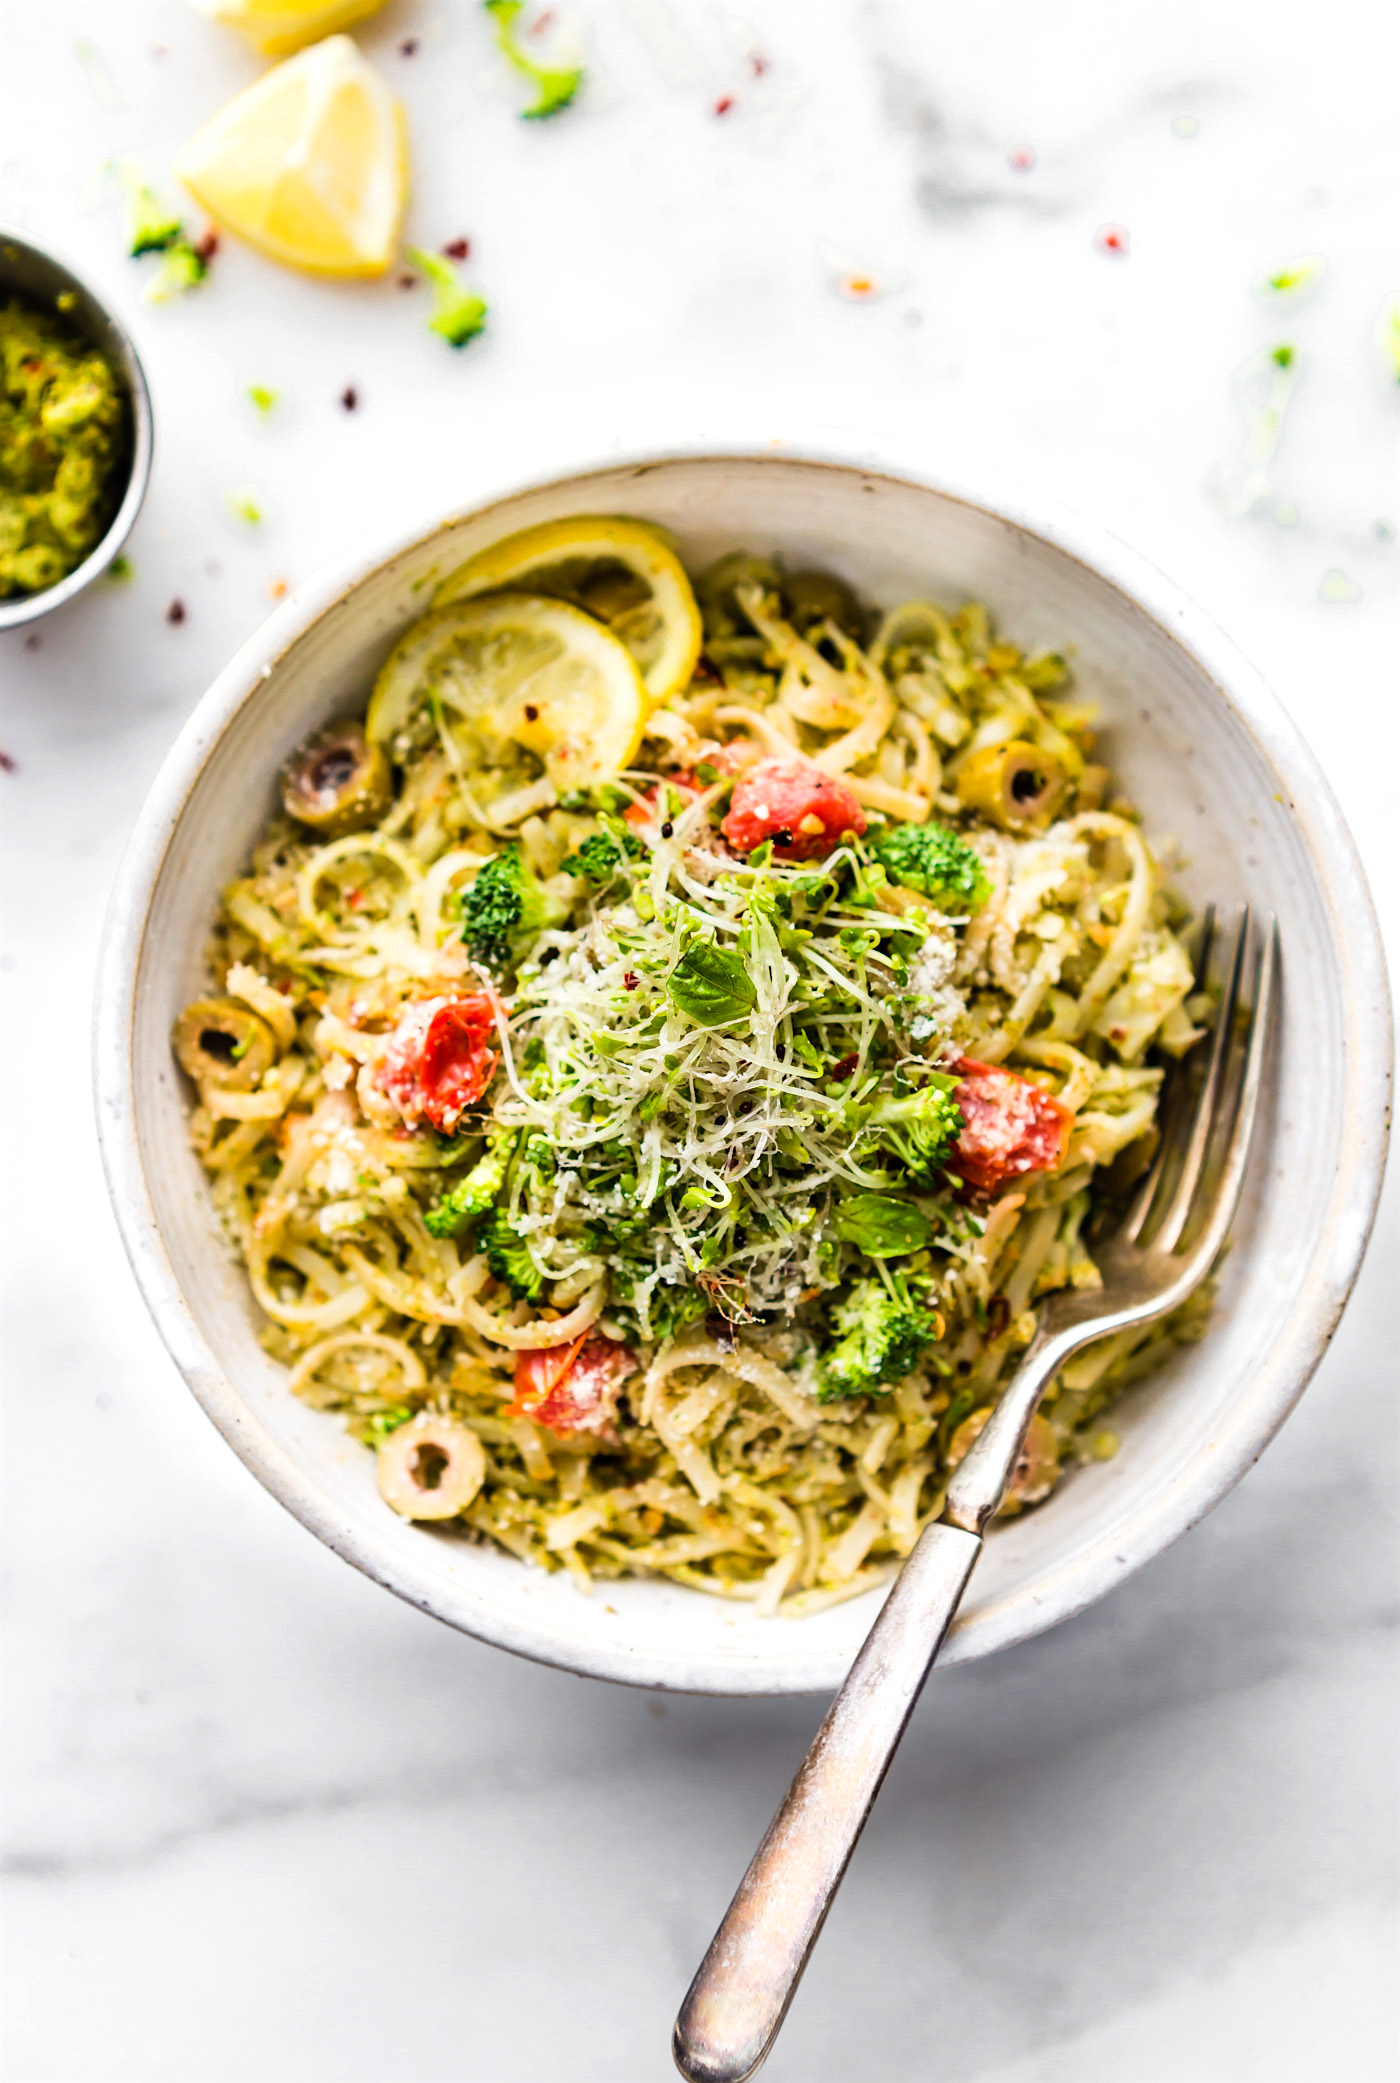 bowl full of spring pesto pasta made with arugula and broccoli